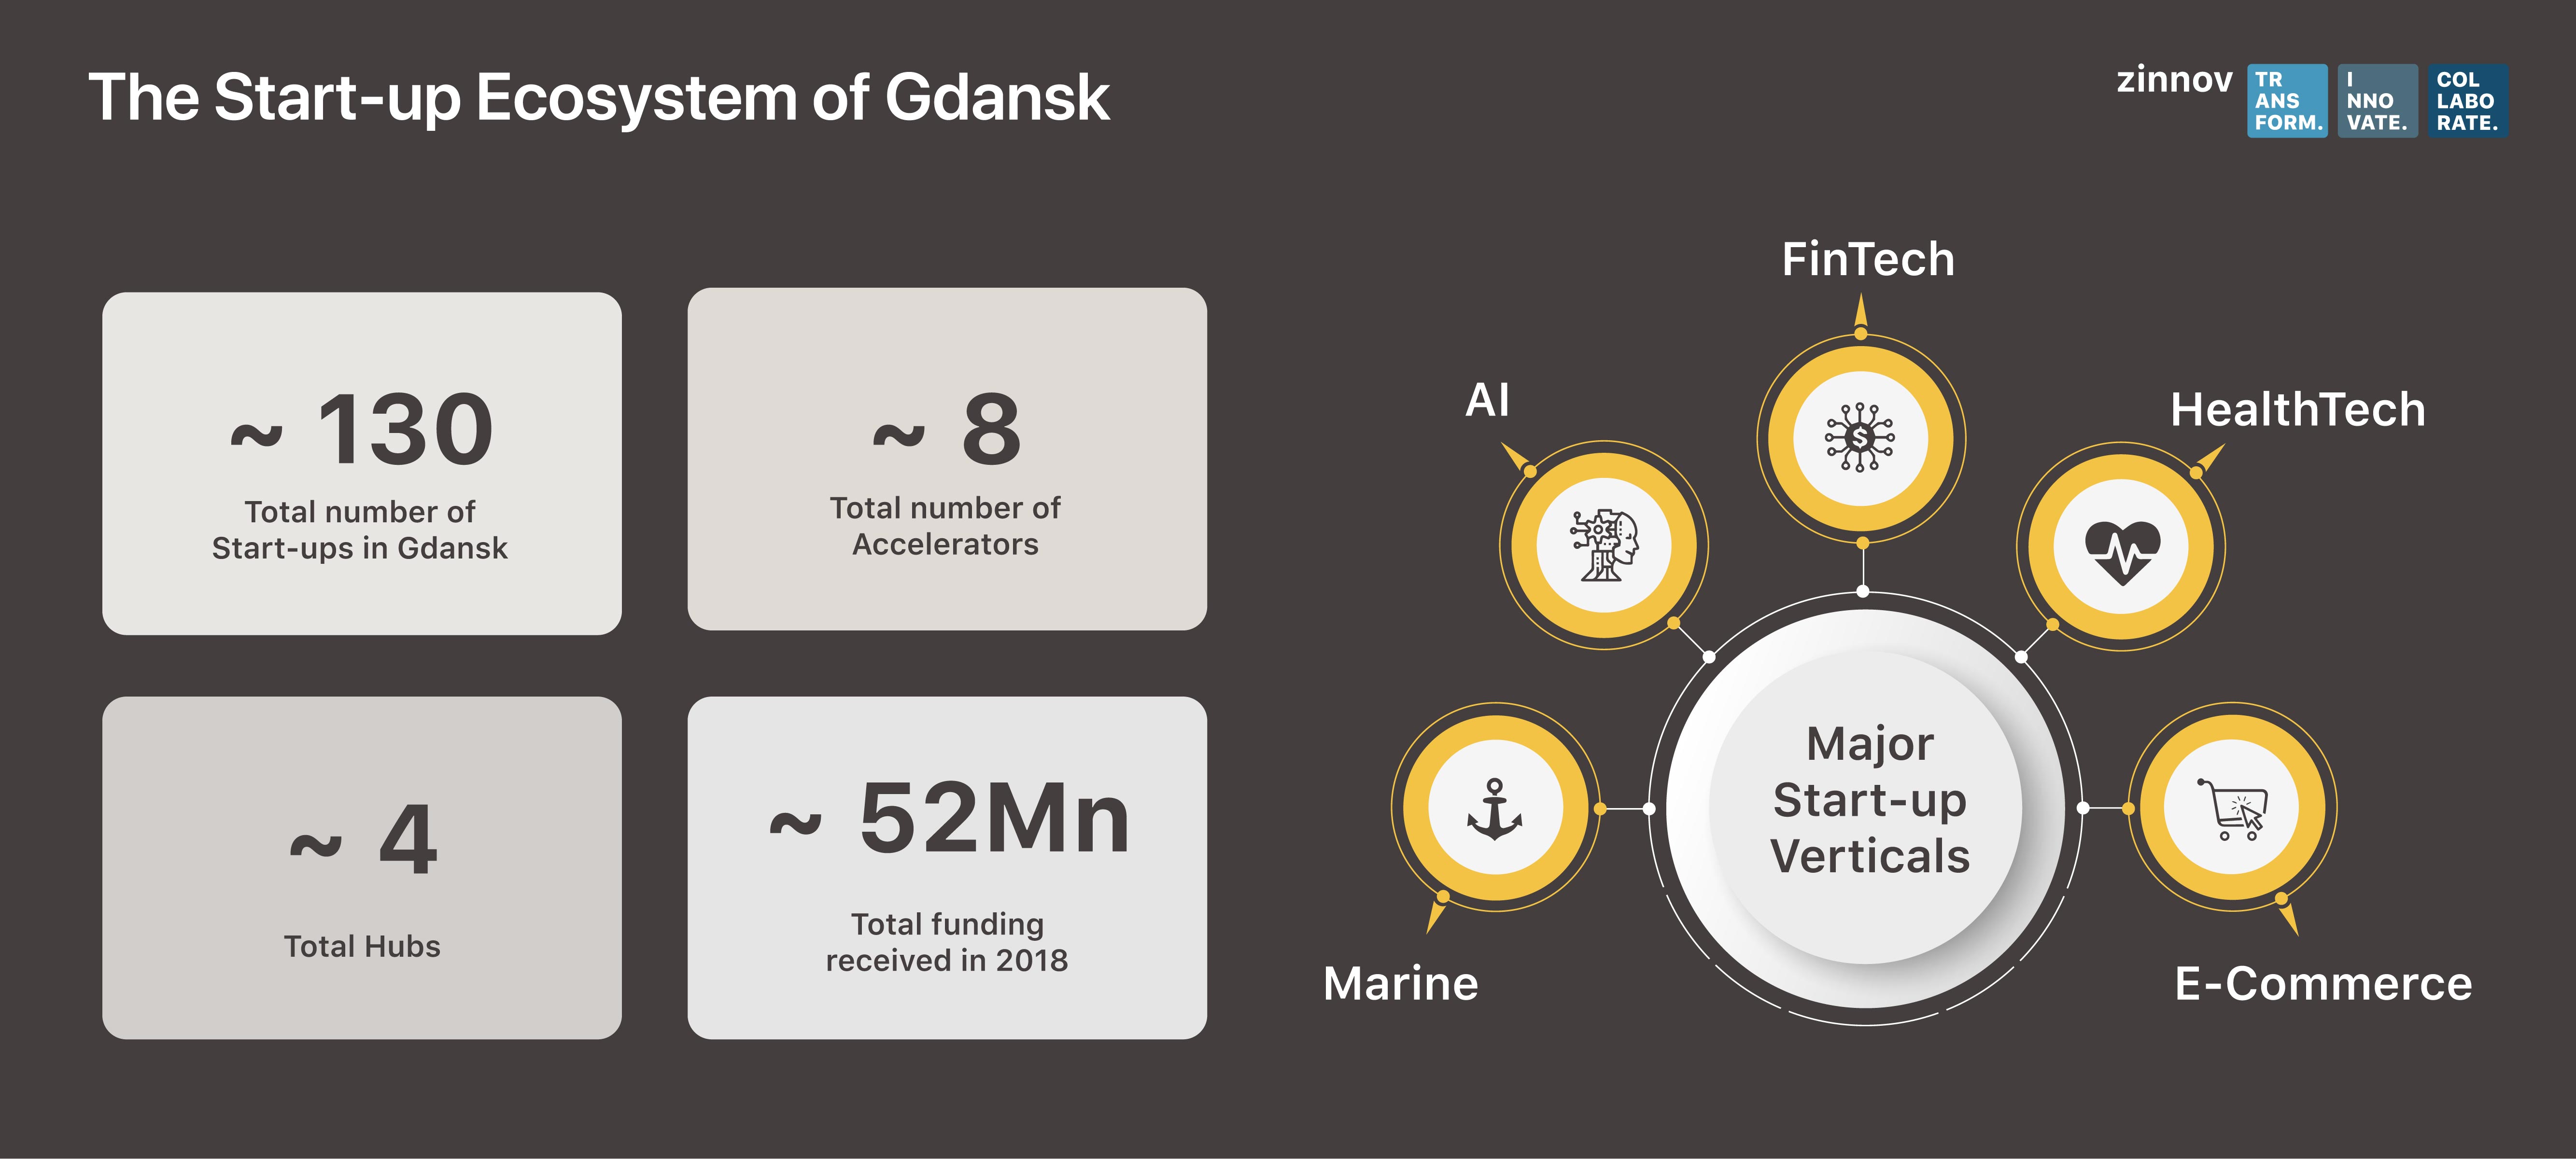 Start-up ecosystem of Gdansk